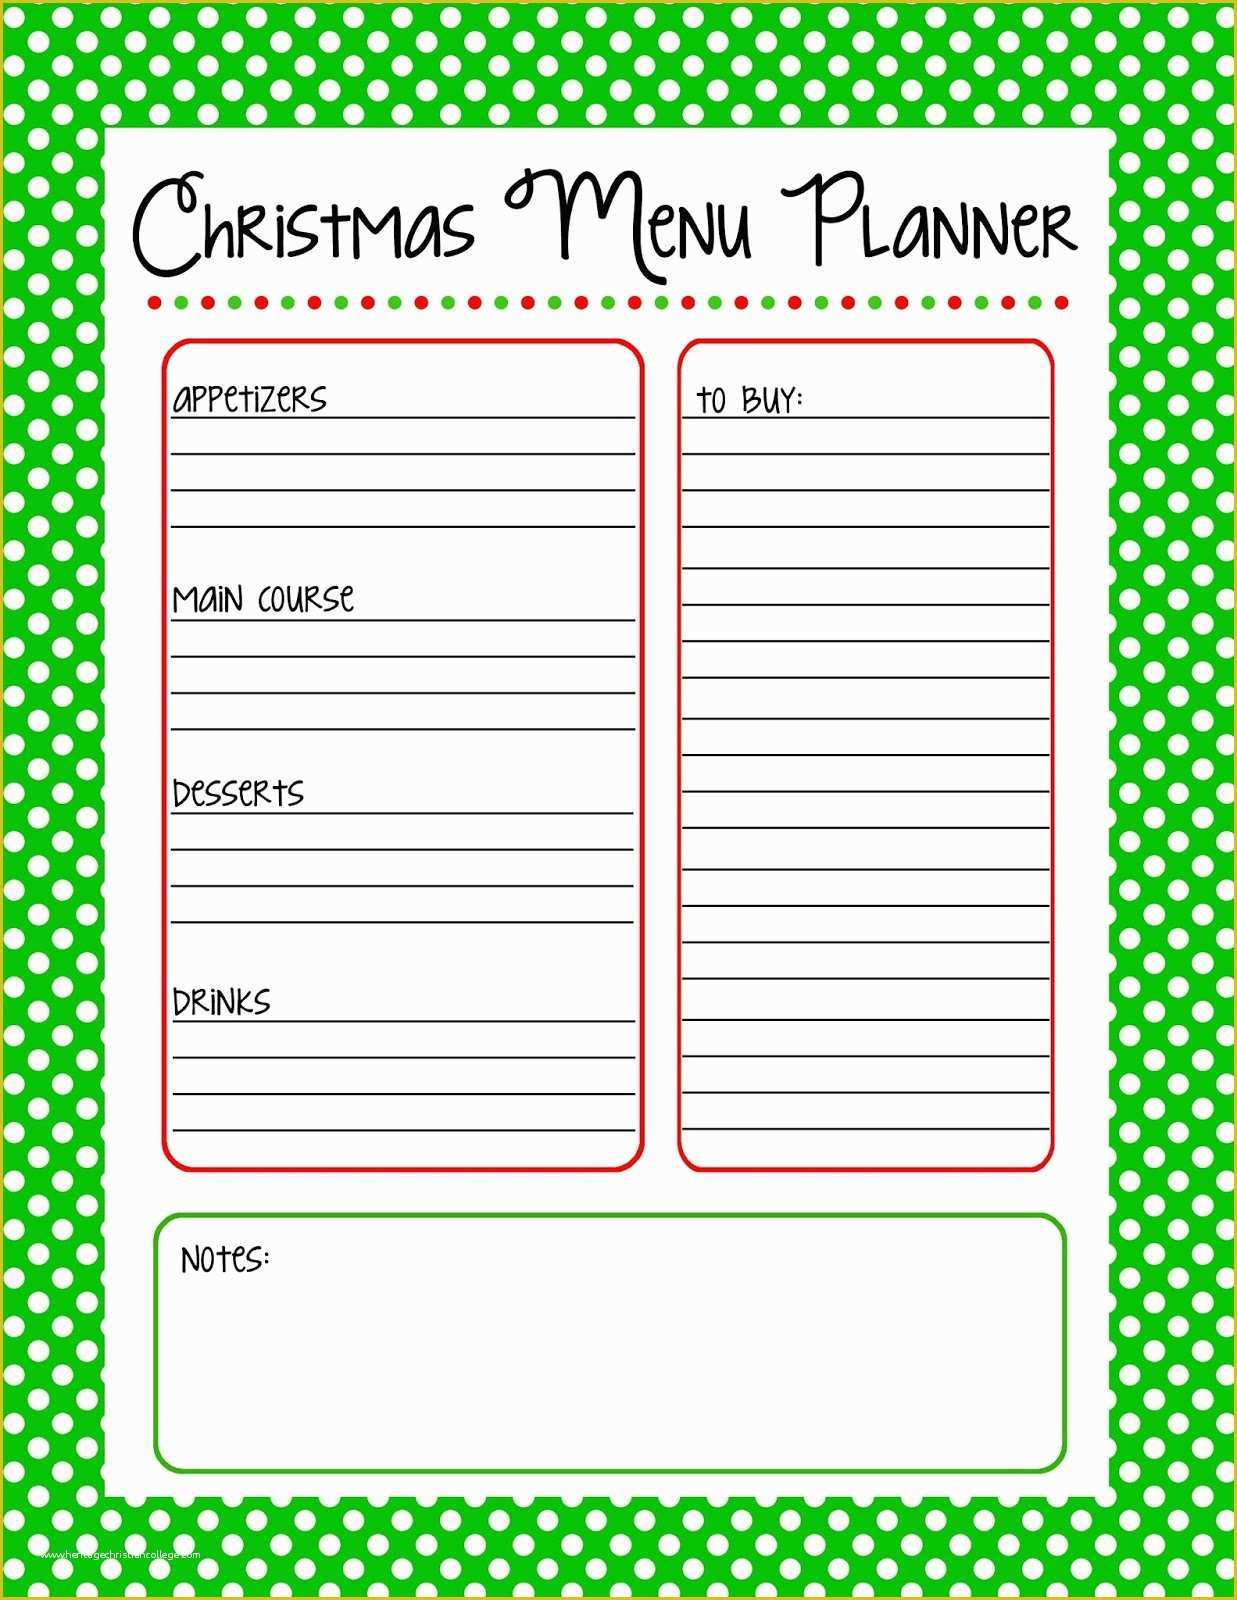 Free Printable Holiday Menu Template Of Christmas Menu Planner Free Printable 25 Days to An